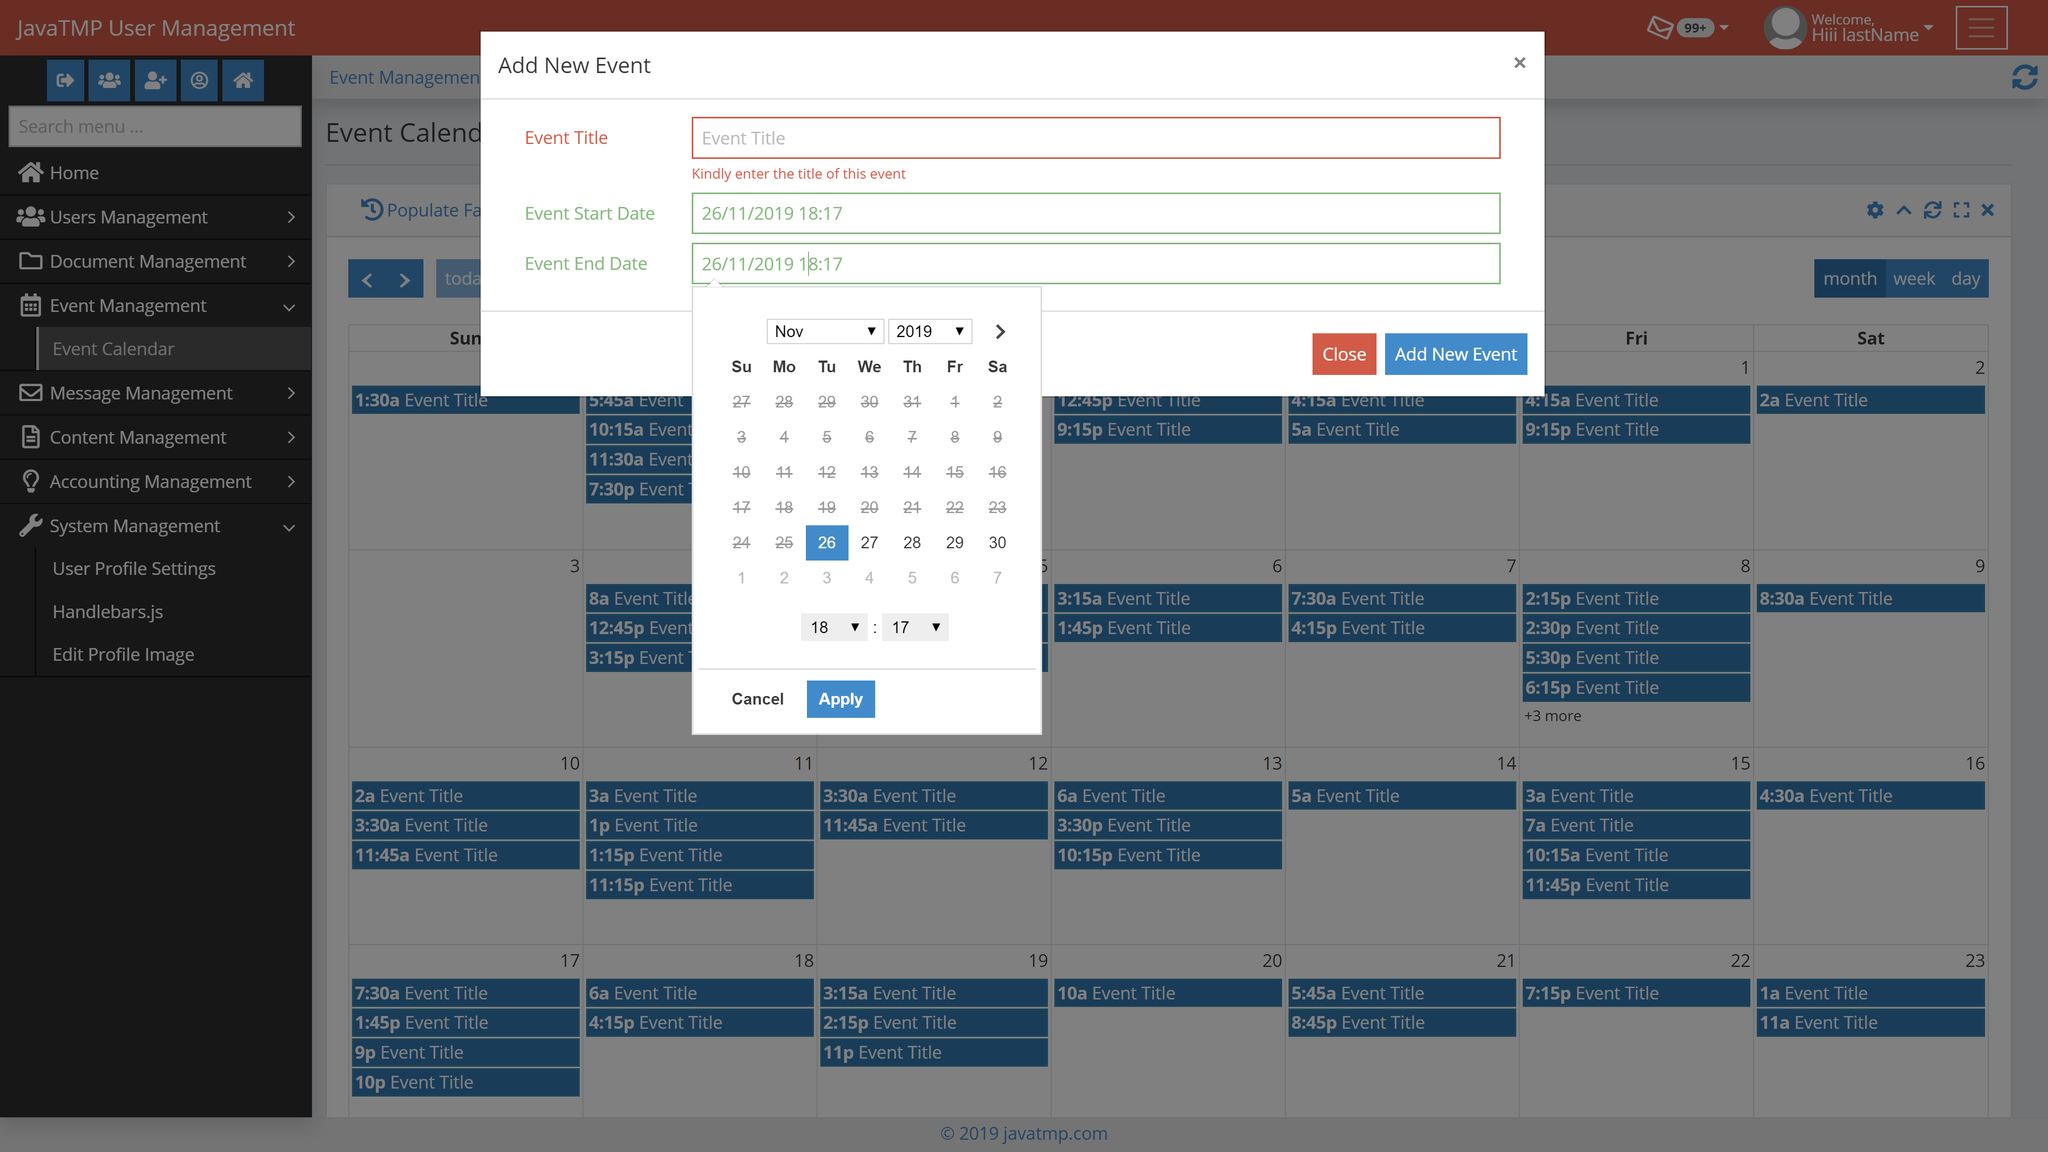 Java Bootstrap mysql jpa Diary and Calendar Events module